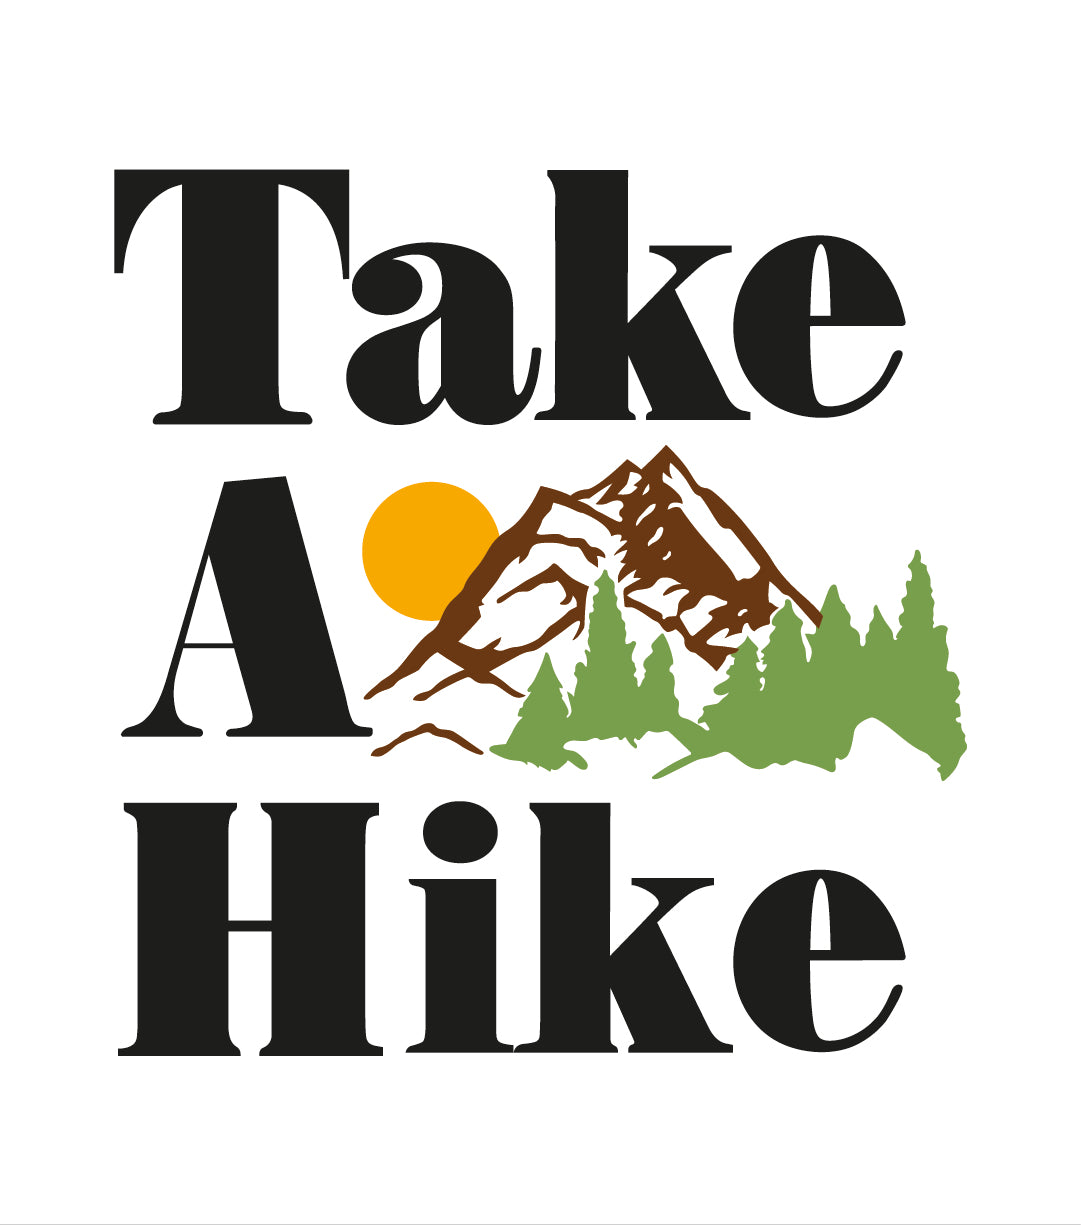 Take A Hike Shirt